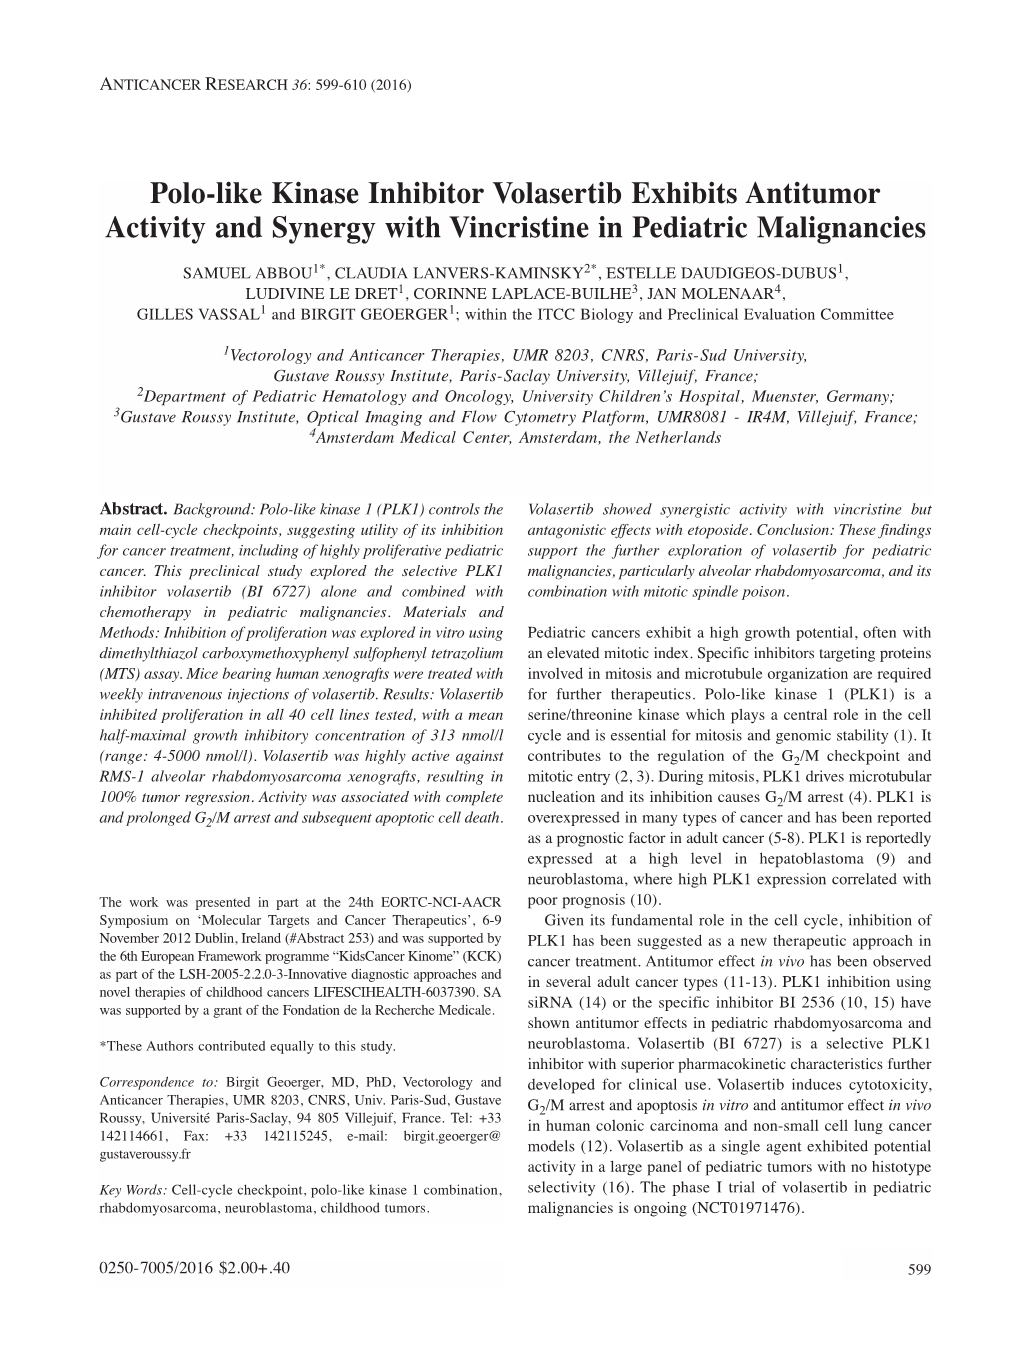 Polo-Like Kinase Inhibitor Volasertib Exhibits Antitumor Activity and Synergy with Vincristine in Pediatric Malignancies